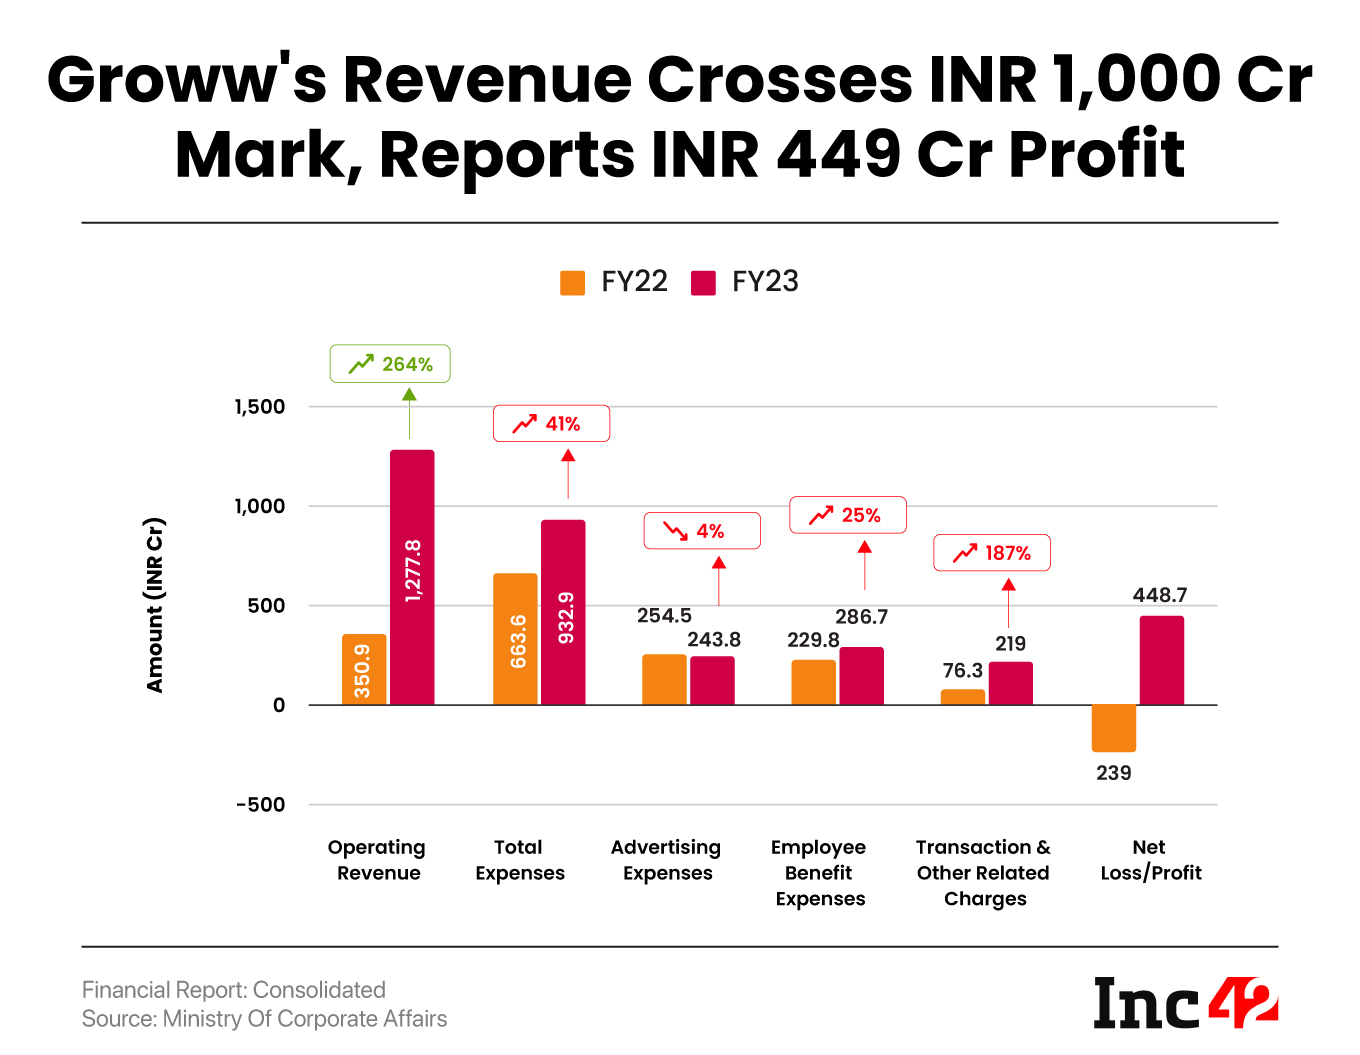 Groww’s Revenue Crosses INR 1,000 Cr Mark, Posts Profit Of INR 449 Cr In FY23